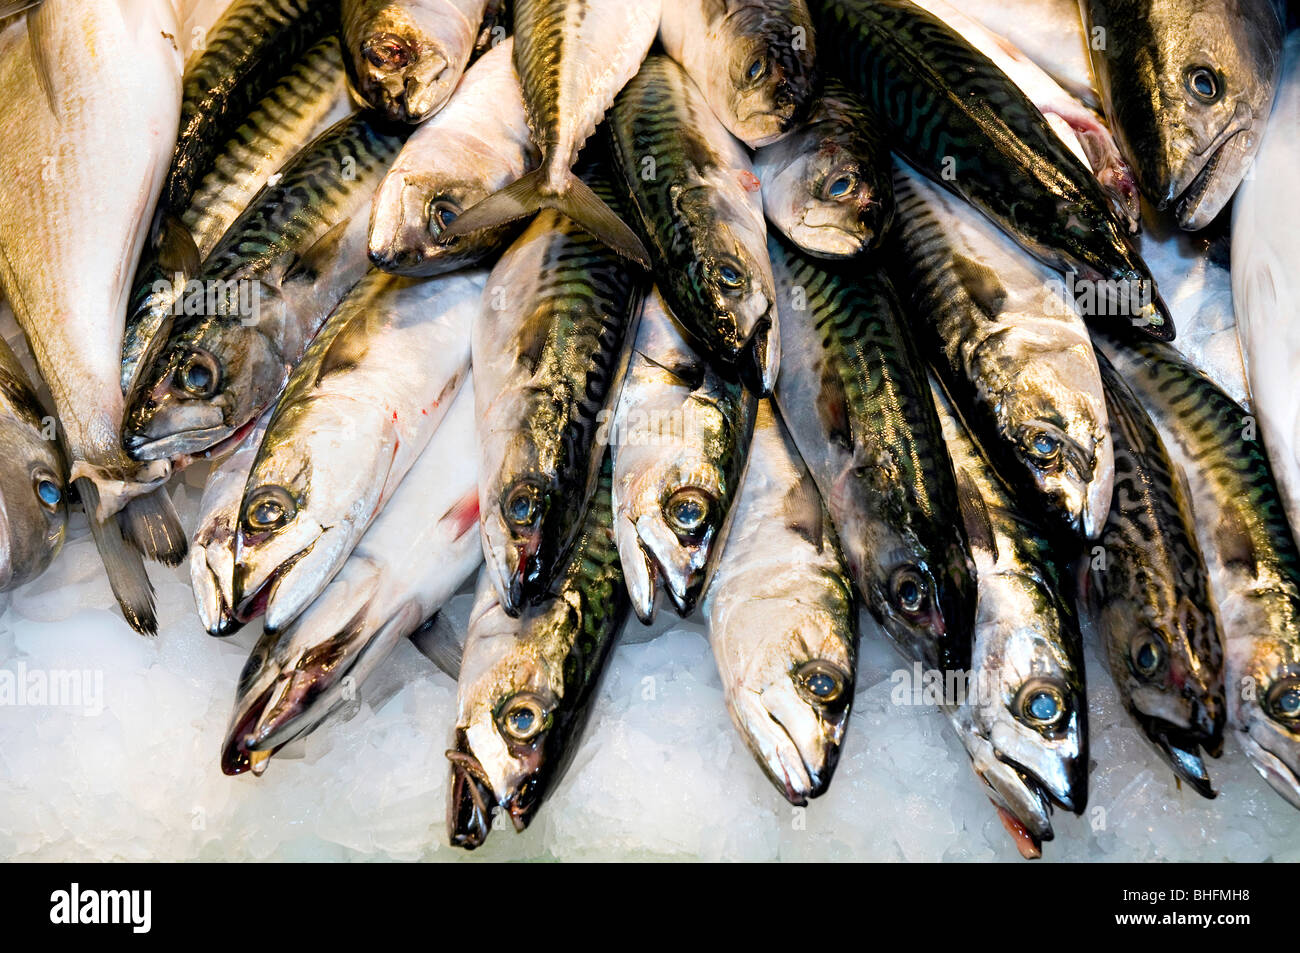 Atlantic mackerel for sale in a market Stock Photo